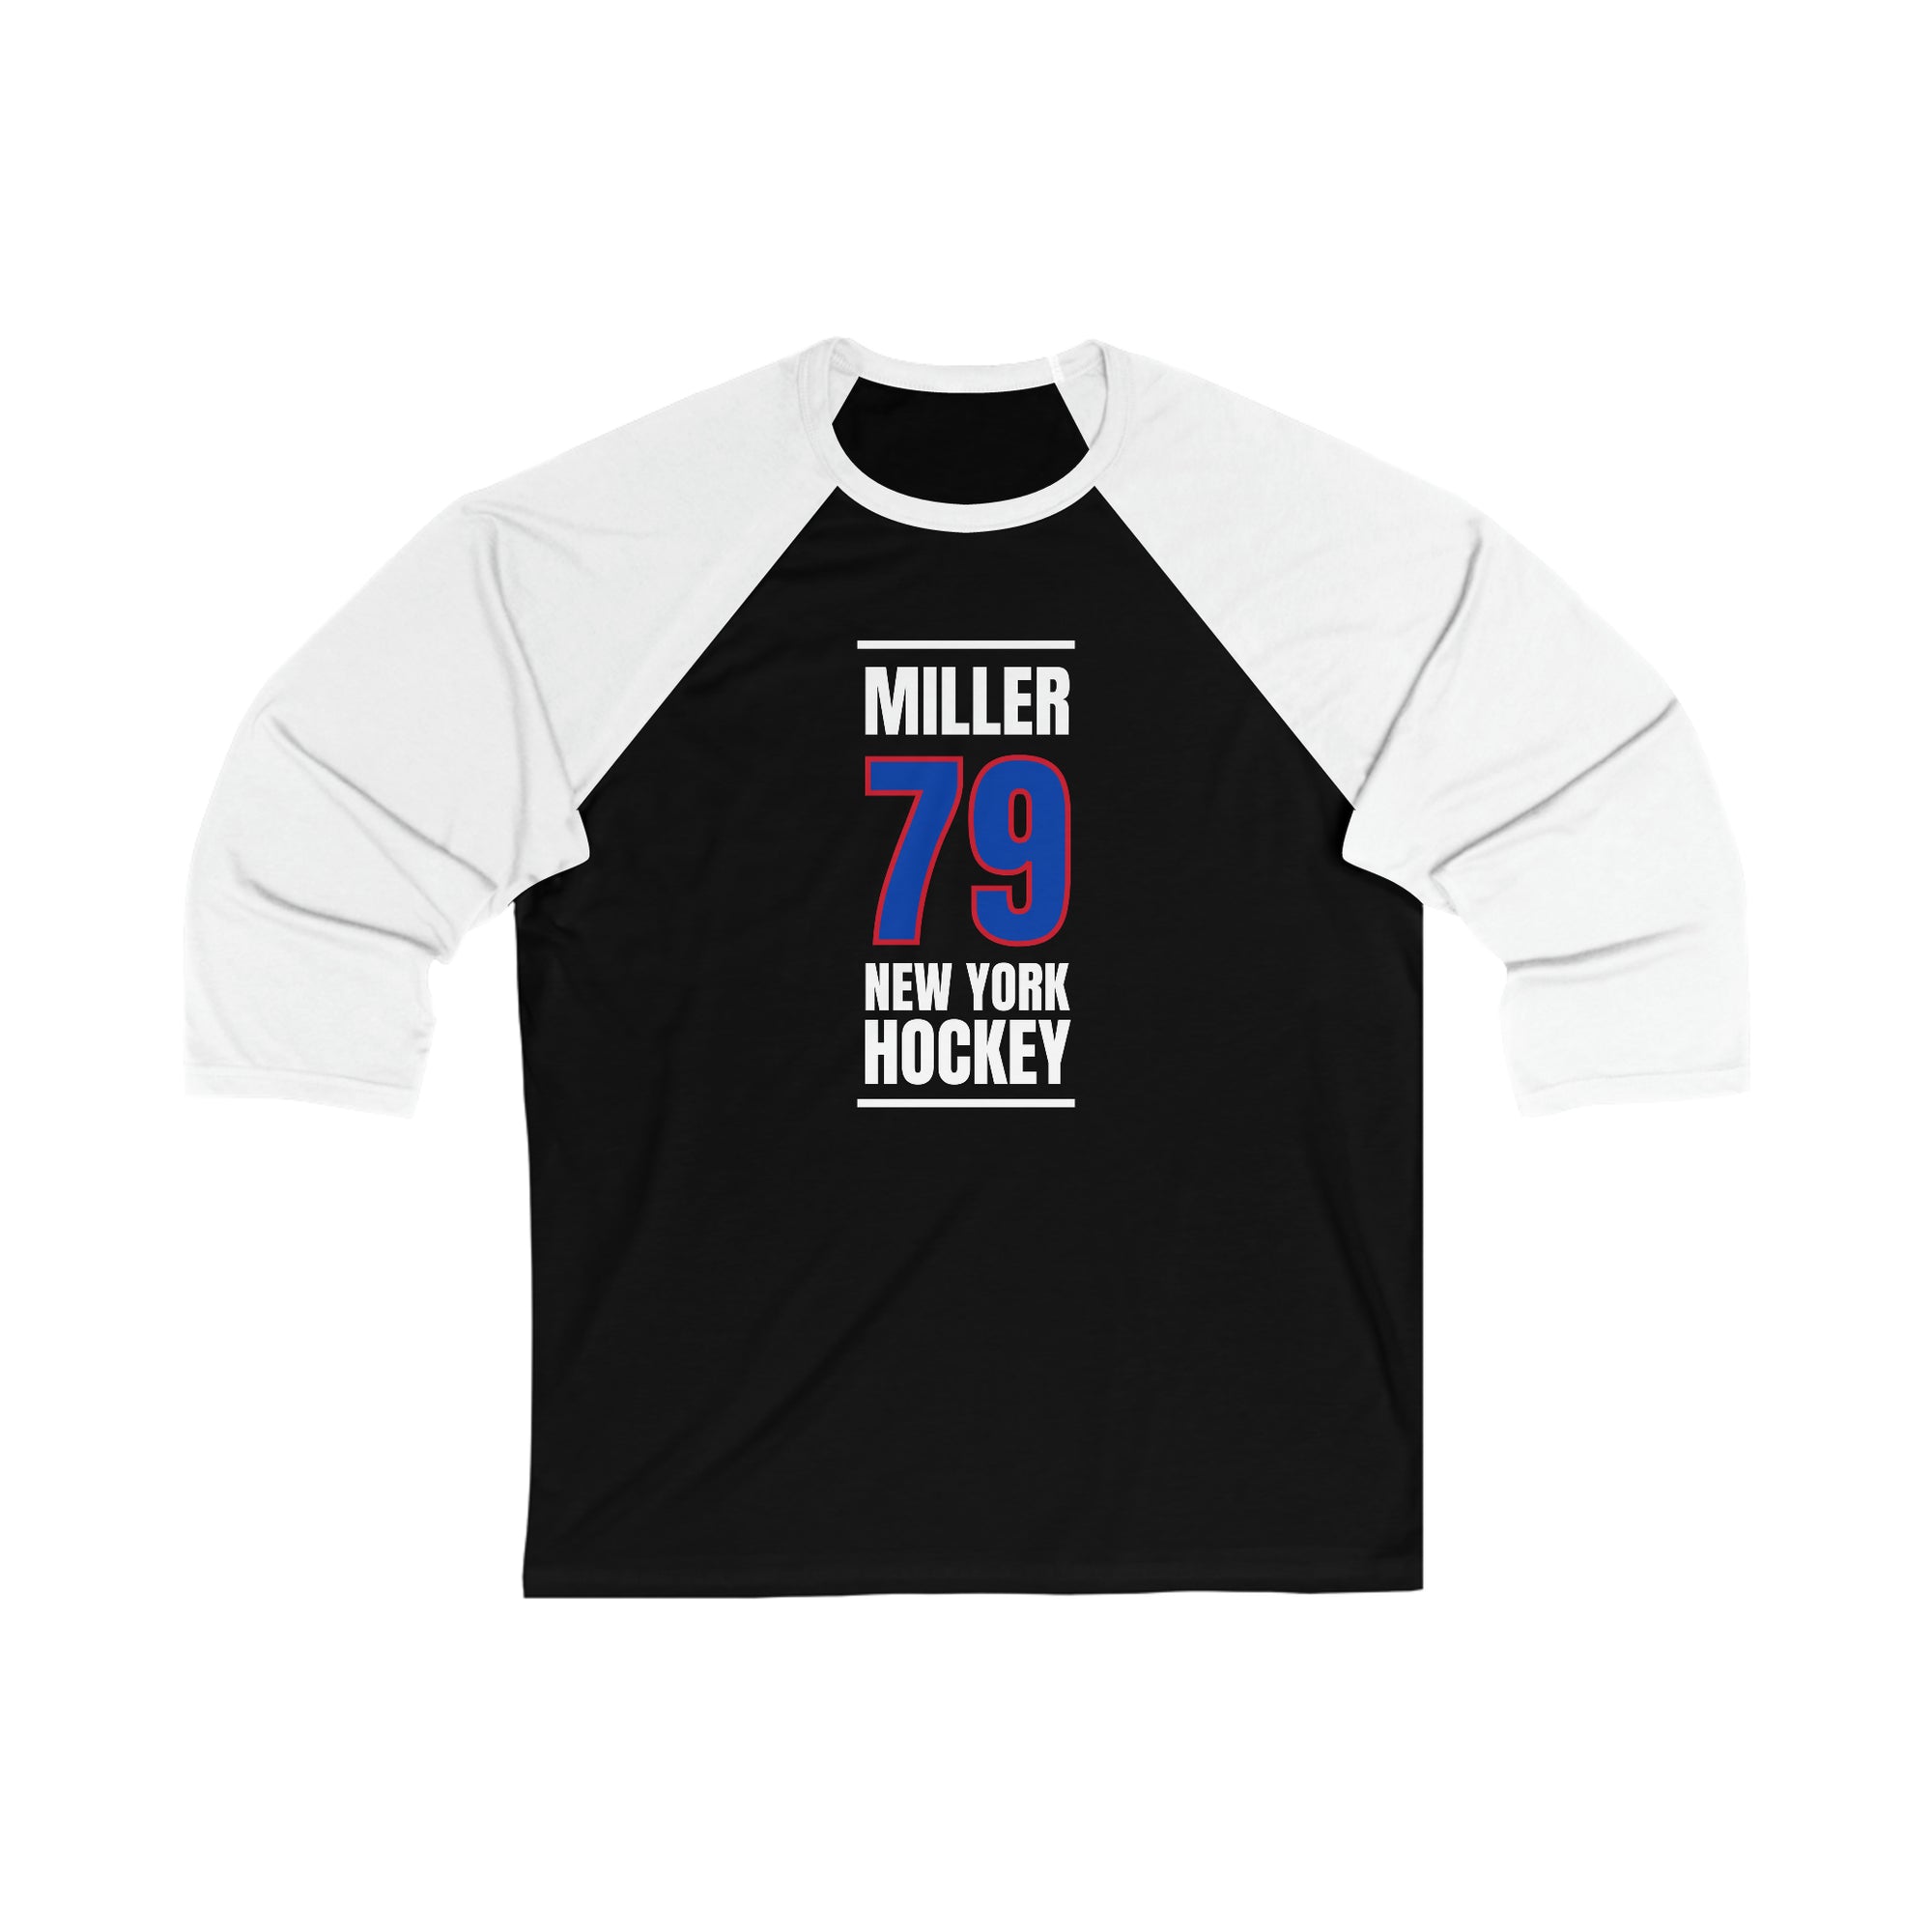 Miller 79 New York Hockey Royal Blue Vertical Design Unisex Tri-Blend 3/4 Sleeve Raglan Baseball Shirt